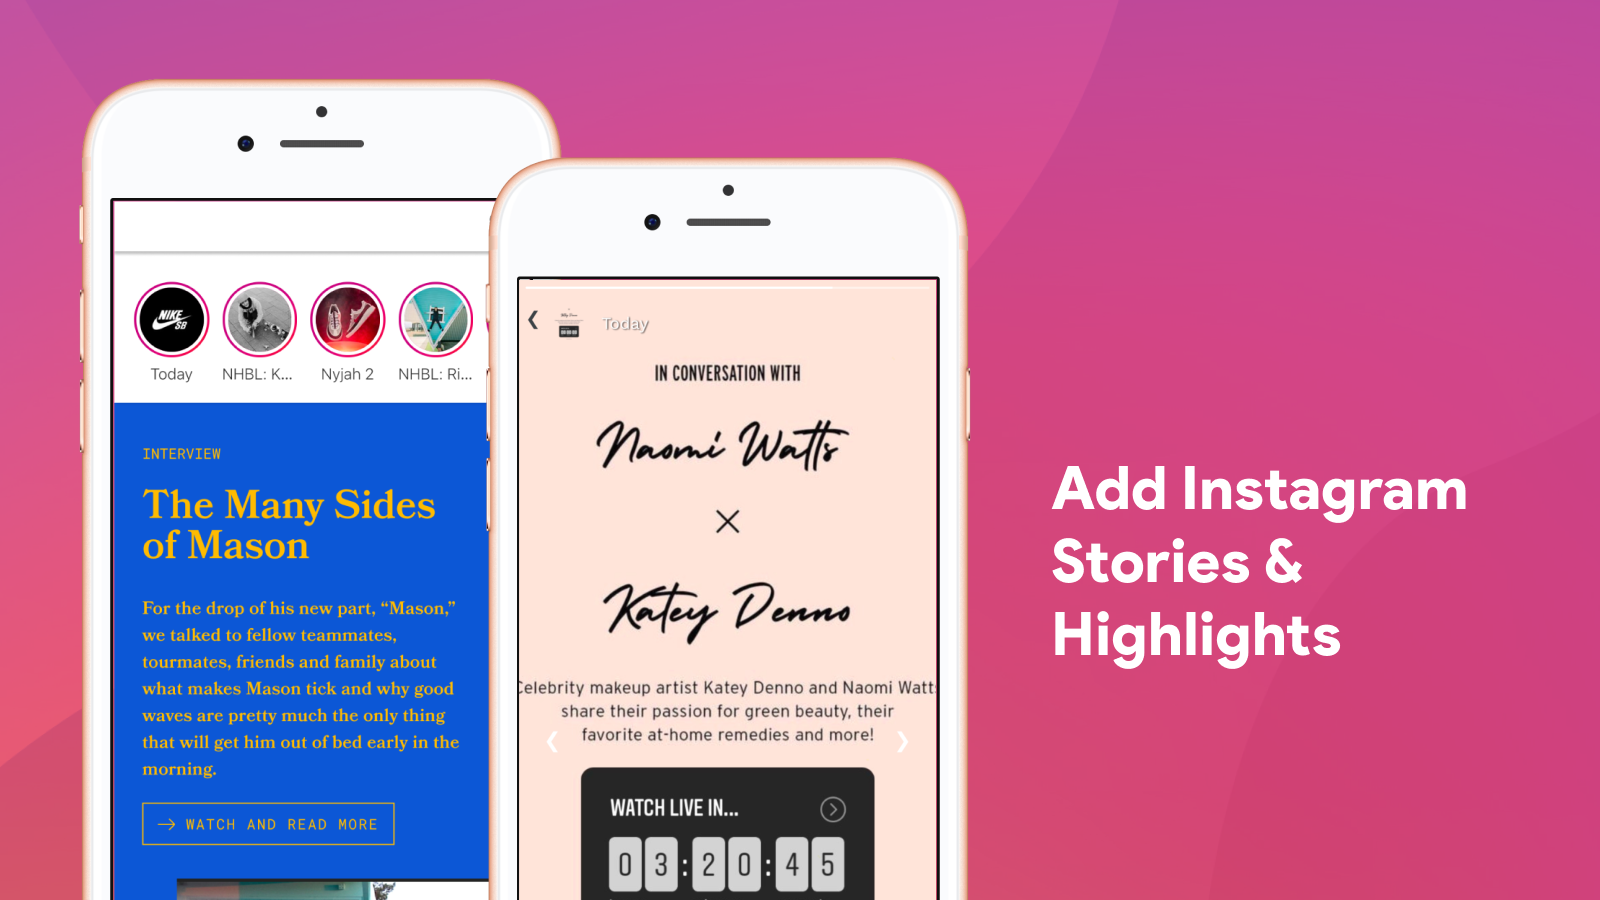 Add Instagram Stories & Highlights